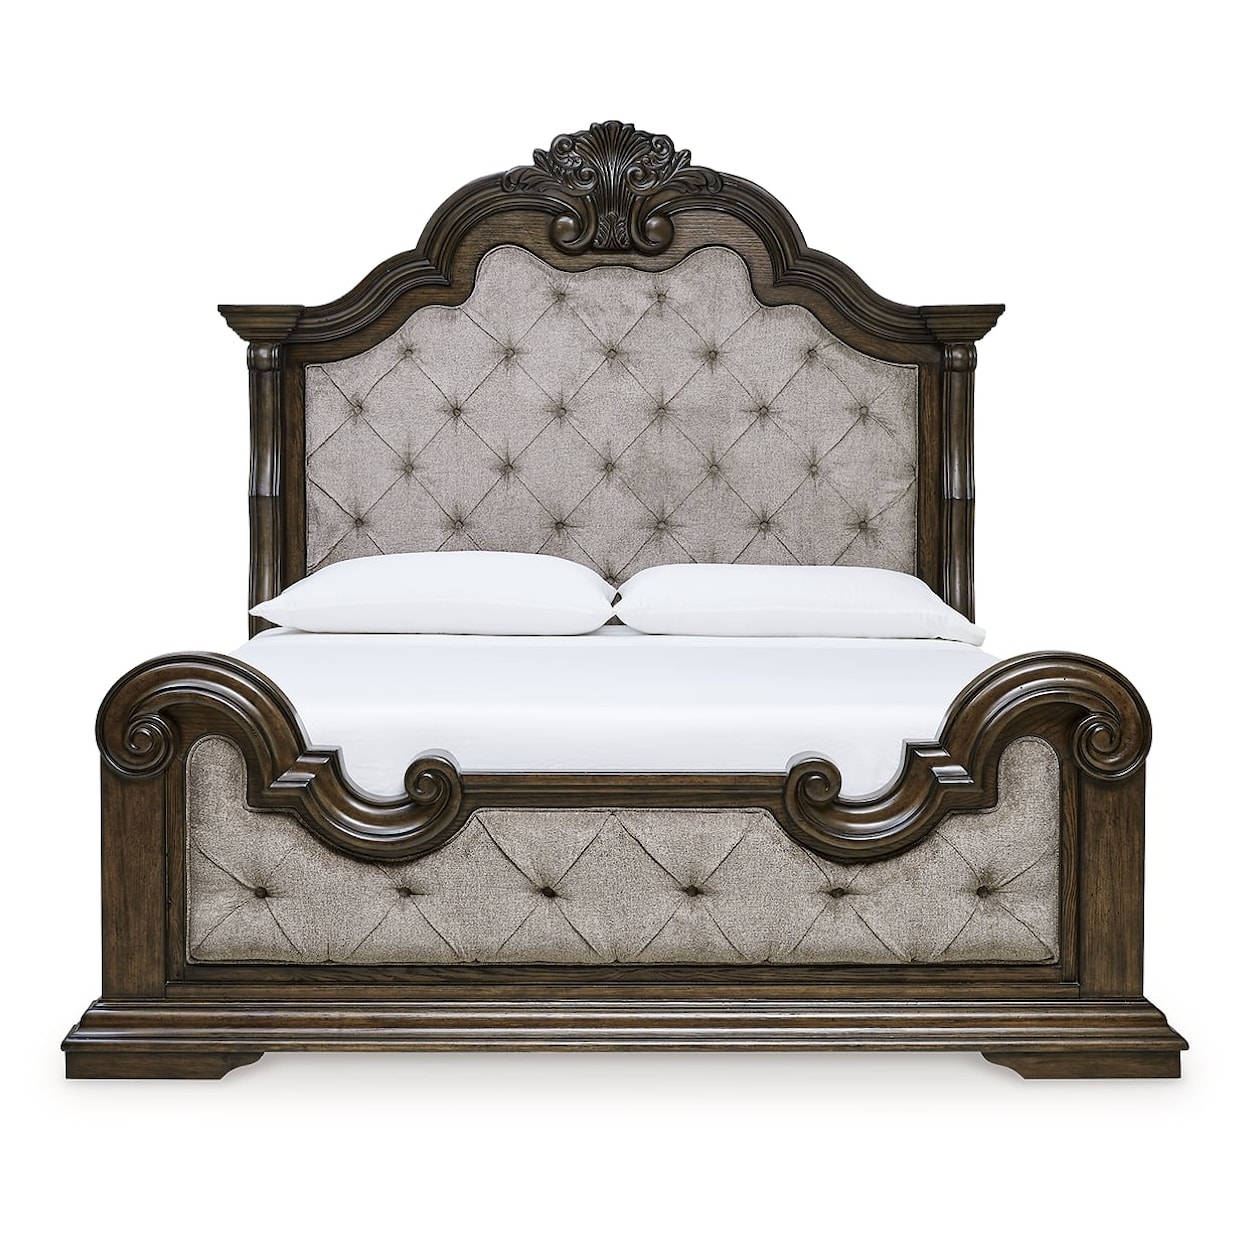 StyleLine Maylee California King Upholstered Bed